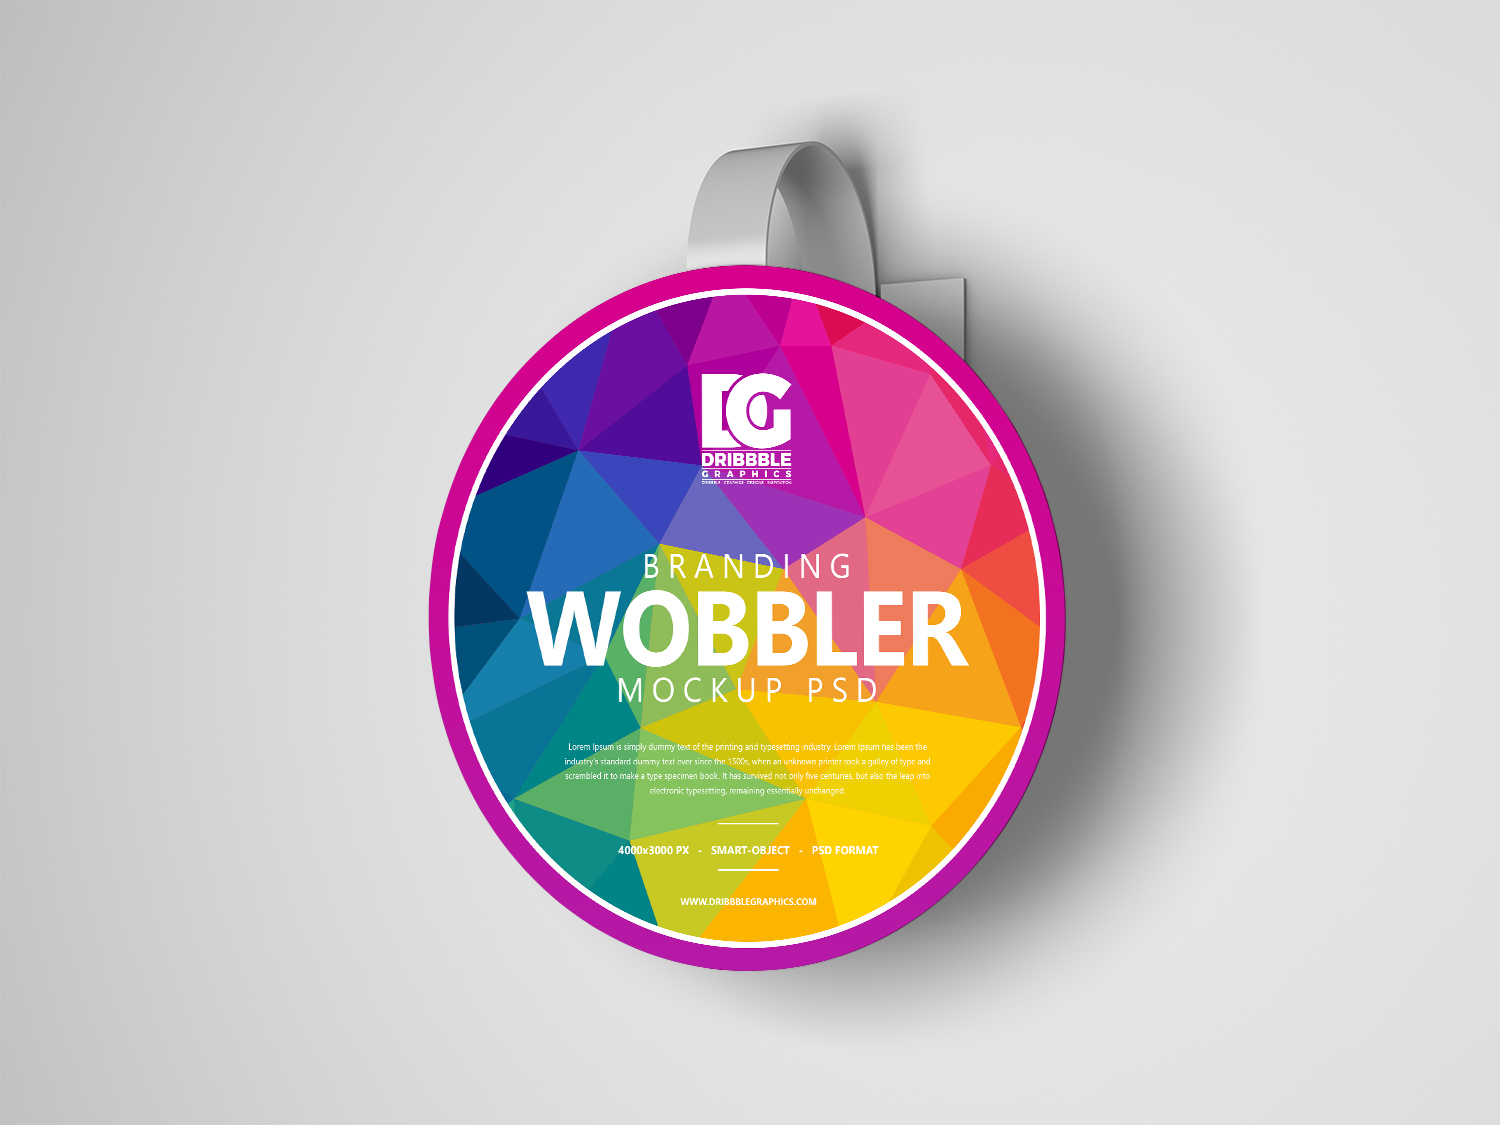 Maqueta de marca Wobbler